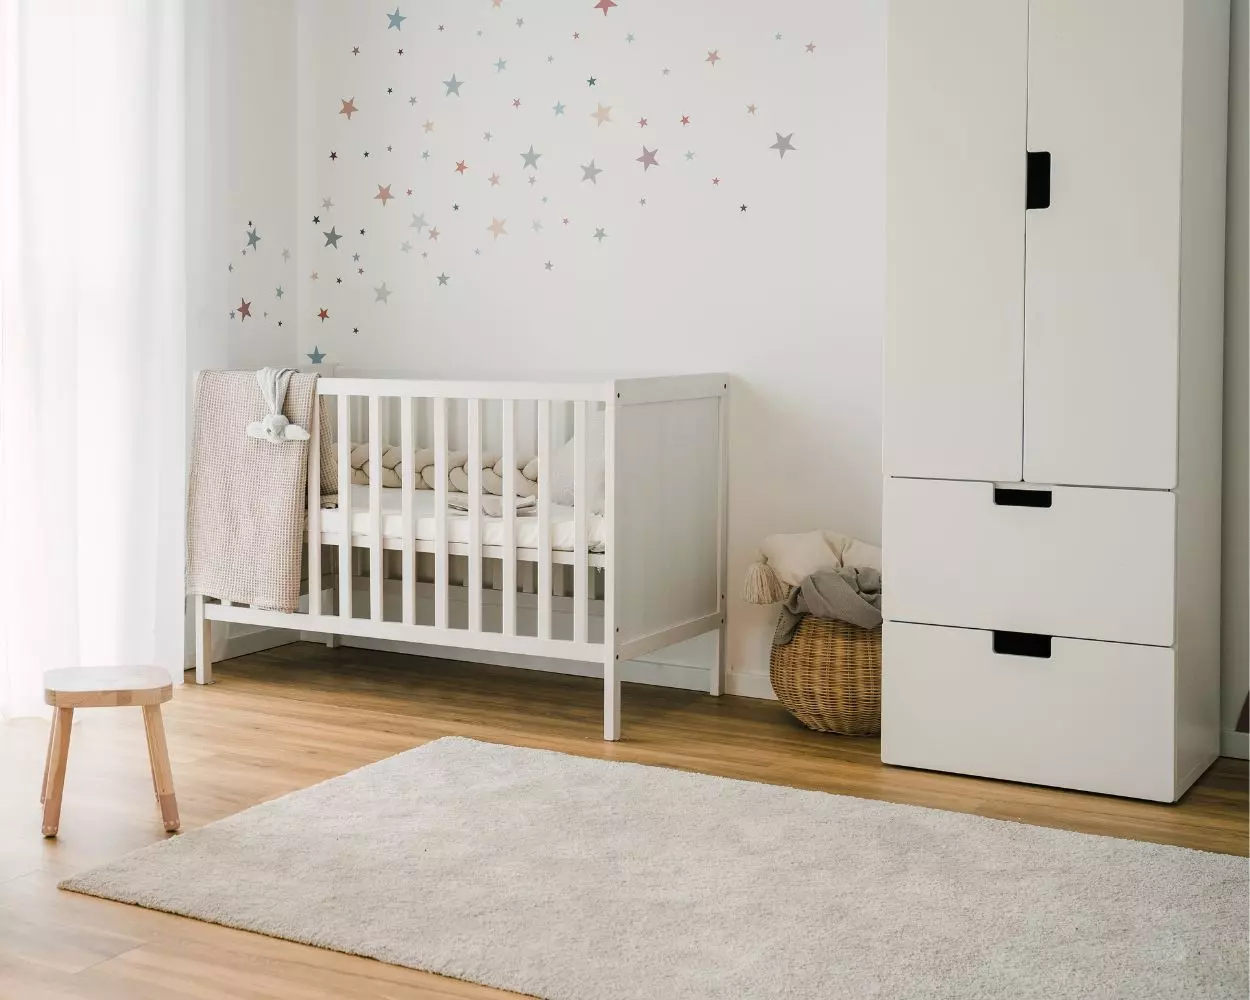 Furnishing an IKEA baby room